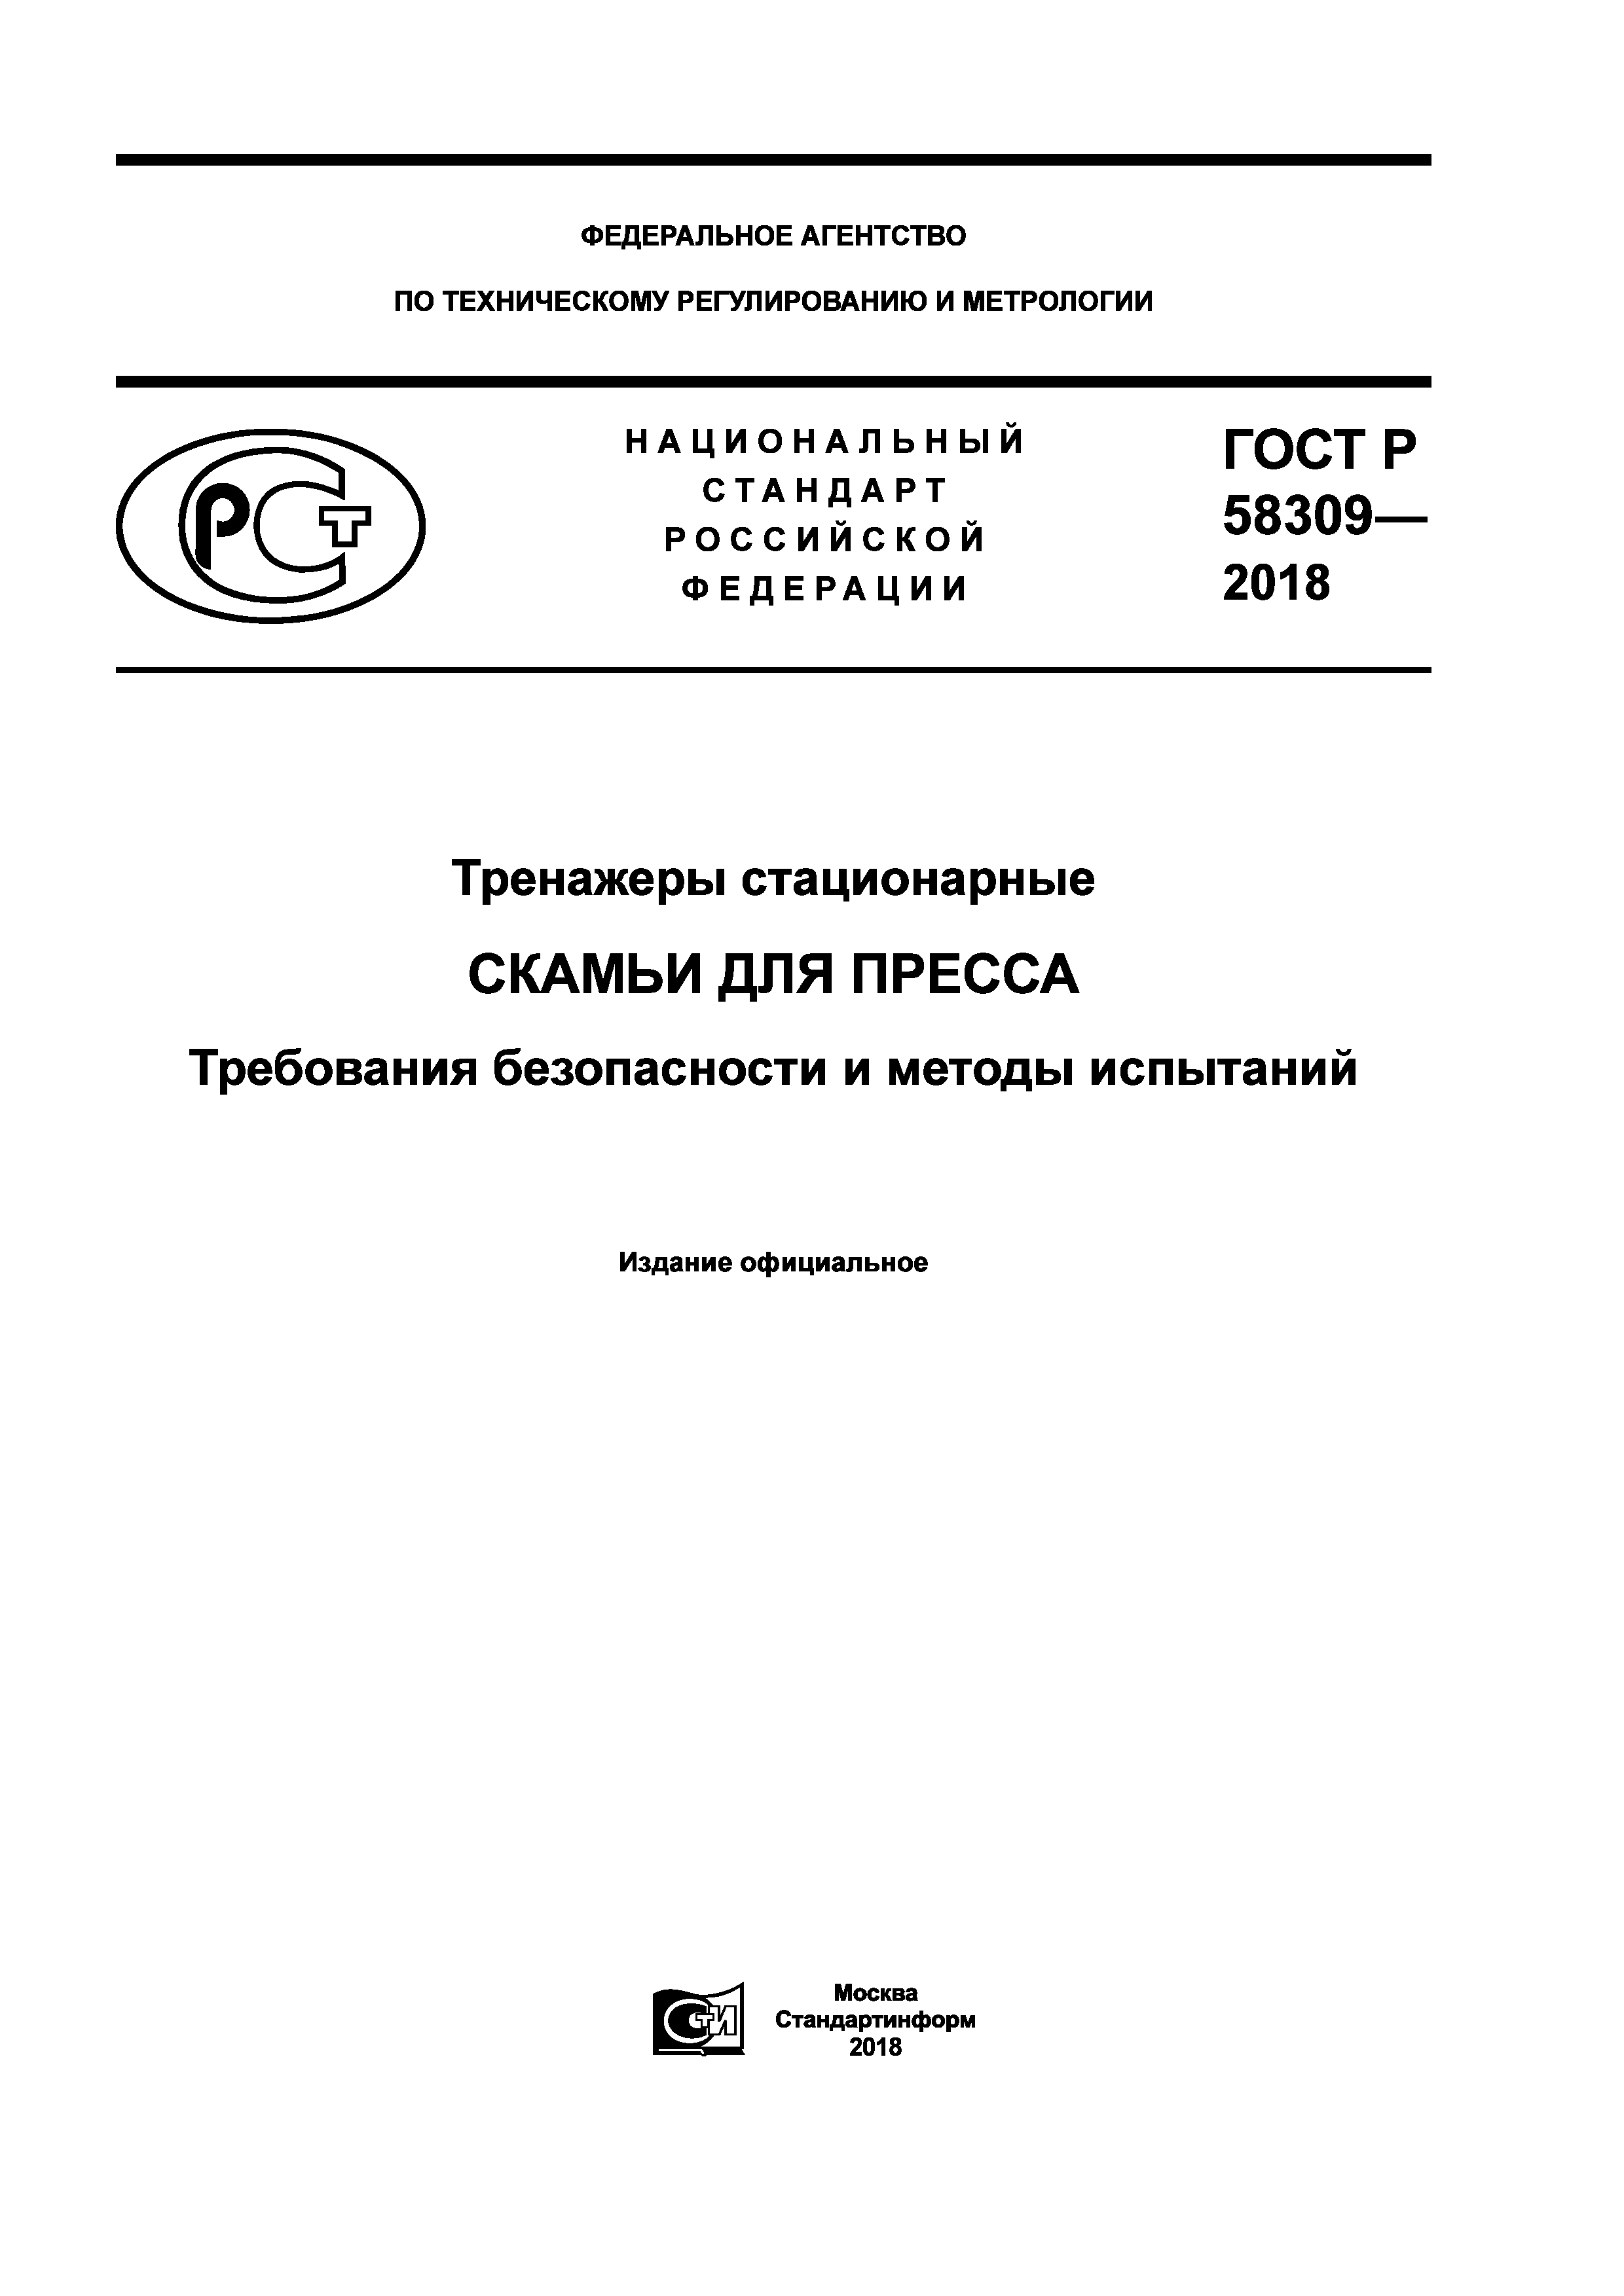 ГОСТ Р 58309-2018